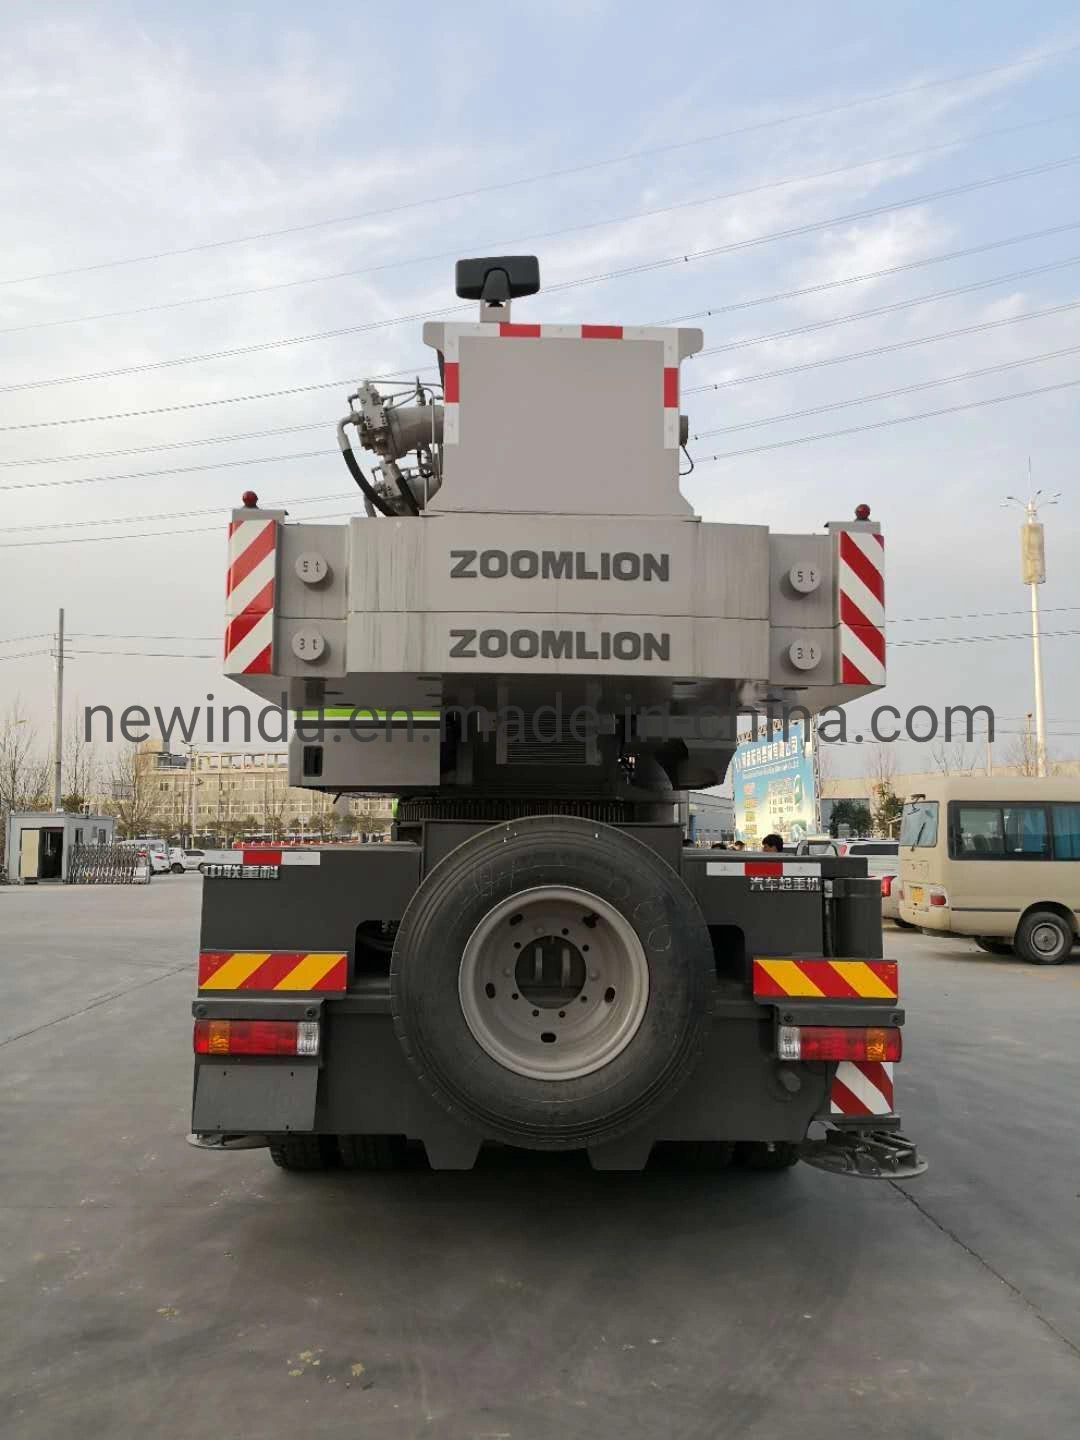 Zoomlion 70 Ton Mobile Crane Lifting Pickup Hydraulic Truck Crane